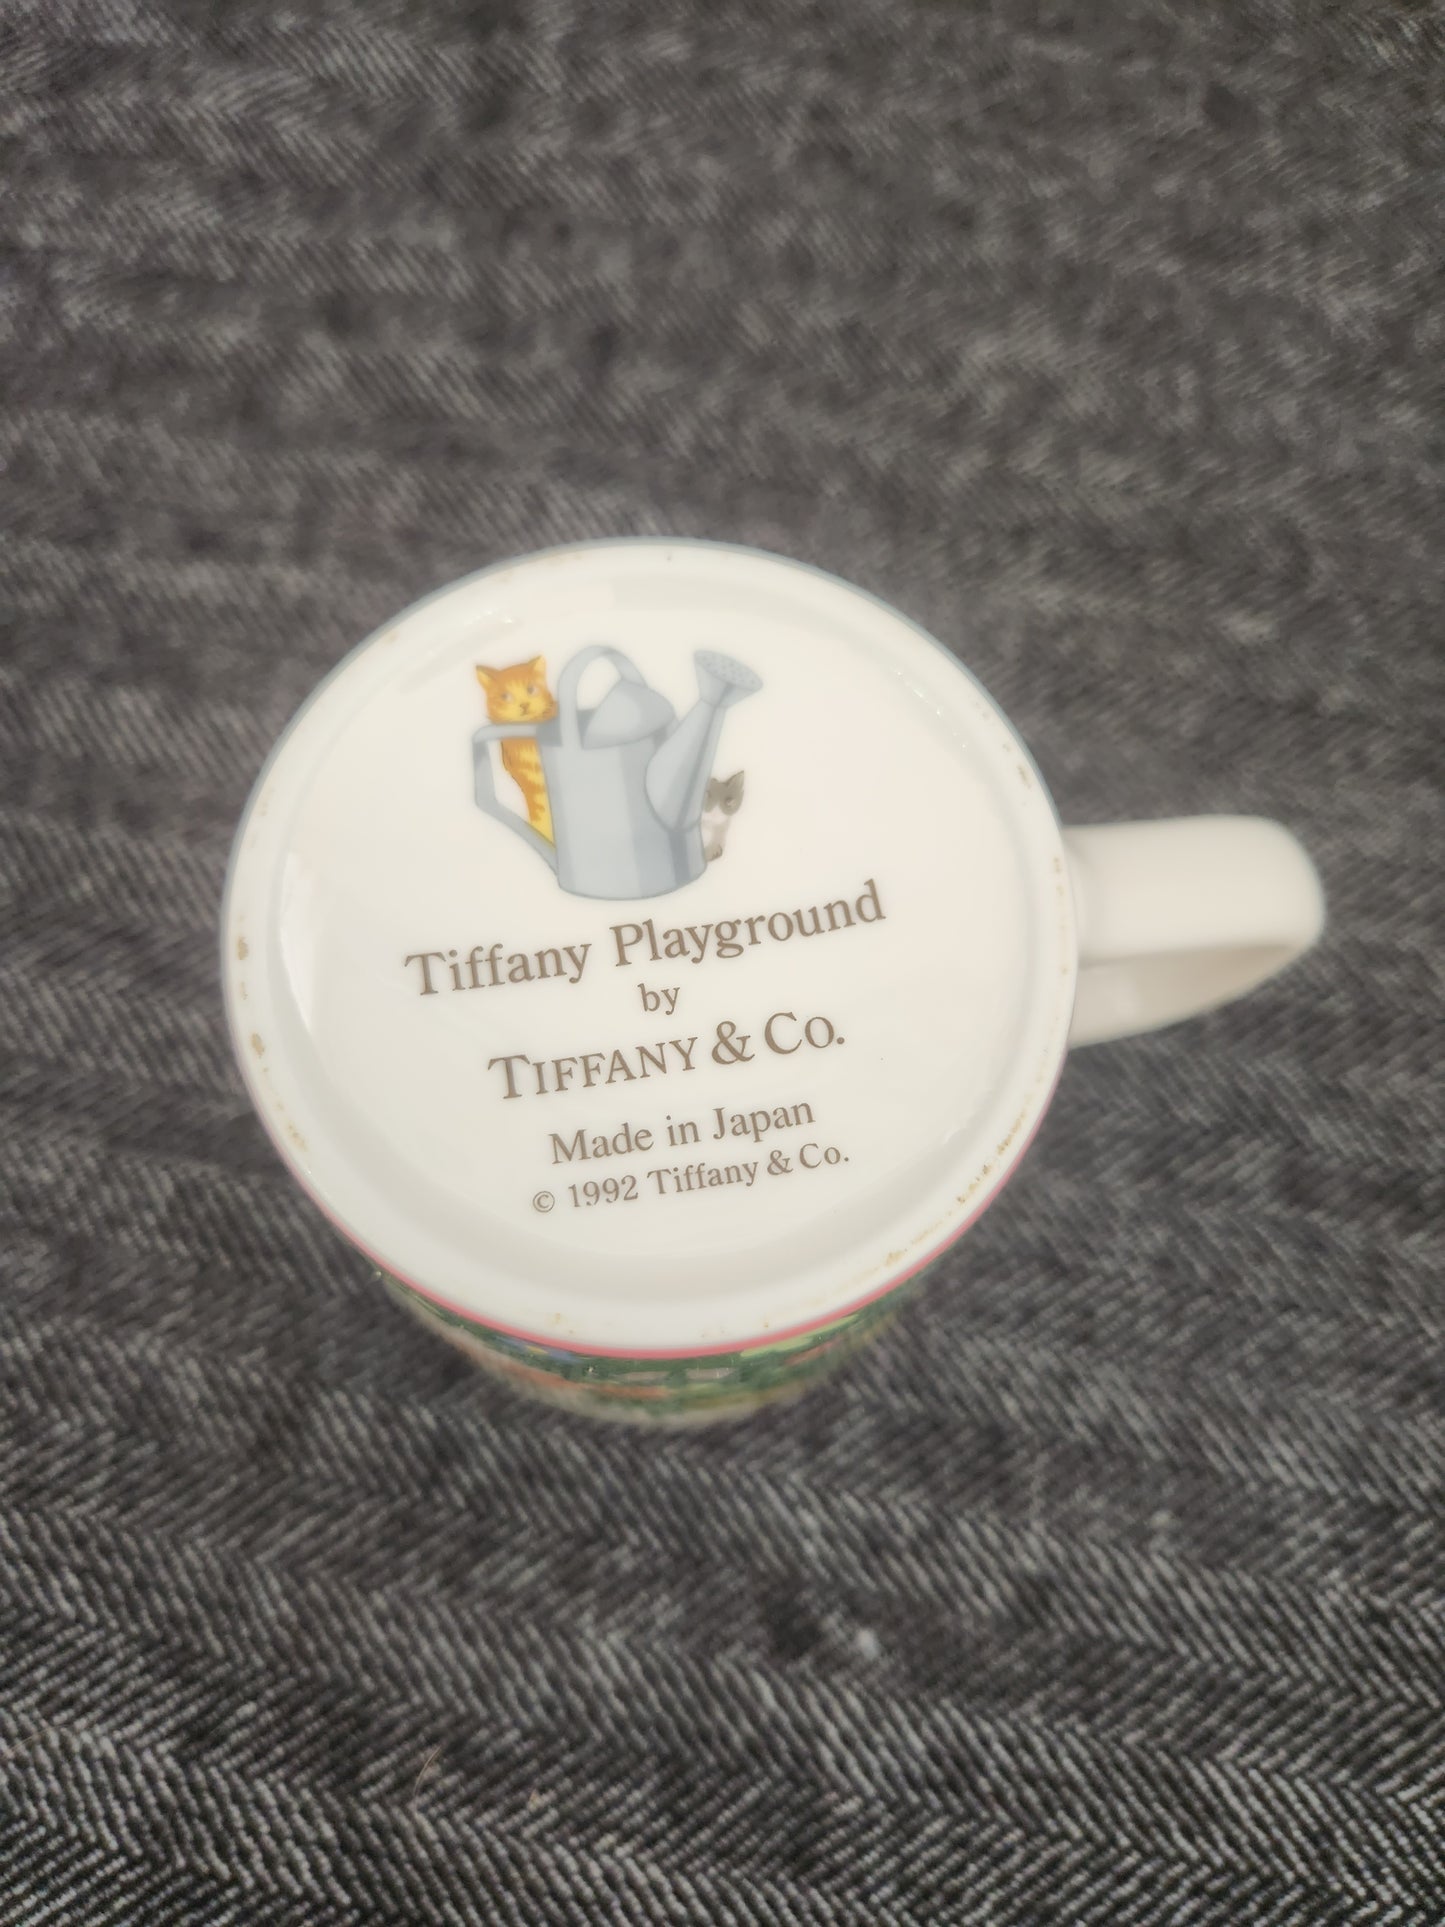 Tiffany Playground by Tiffany & Co. (3-Piece Set)